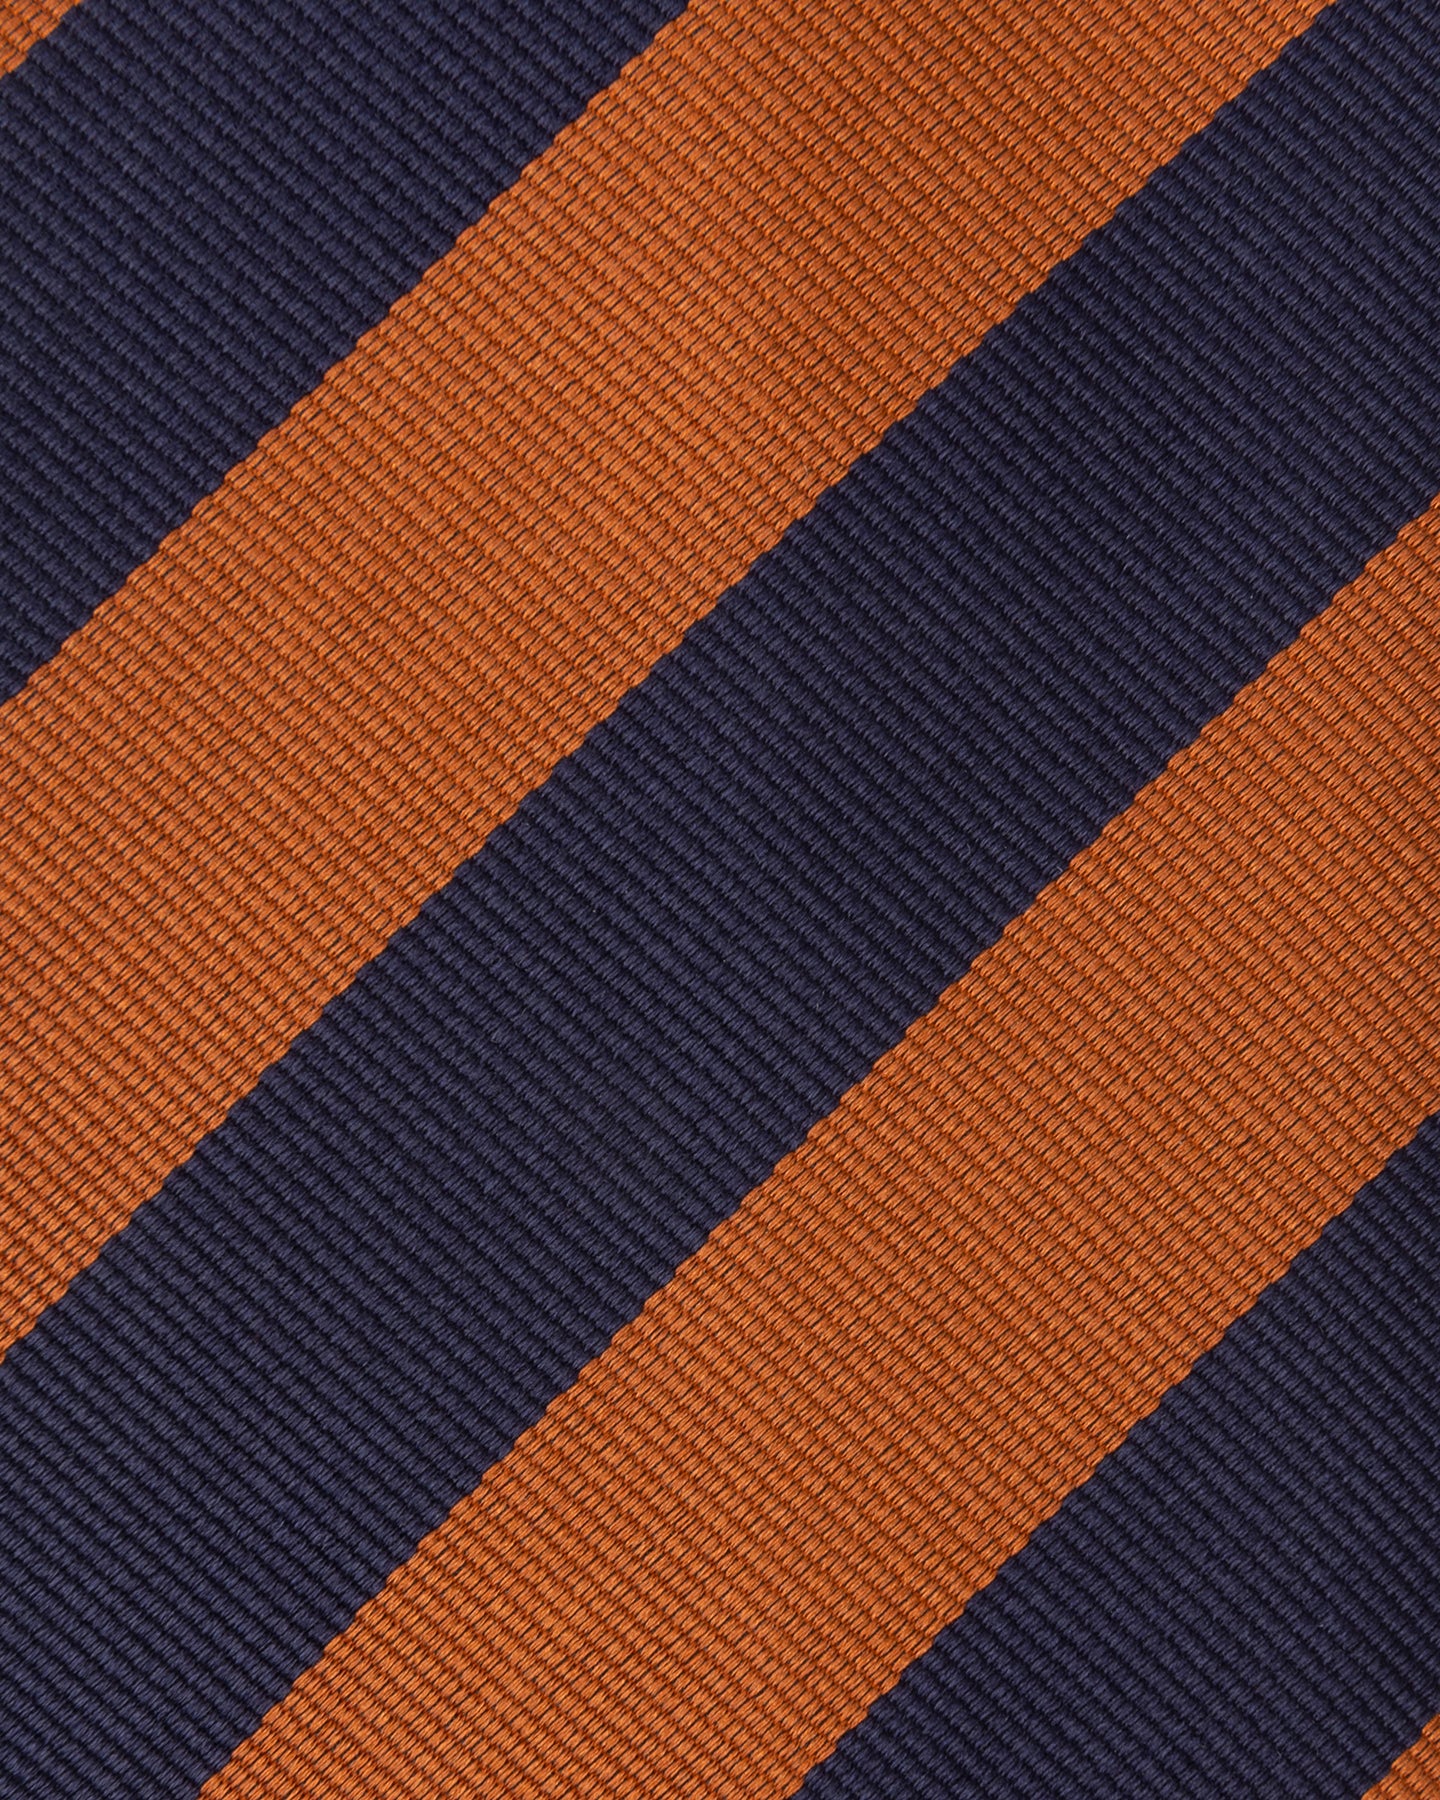 Navy and Orange Regimental Stripe Repp Tie